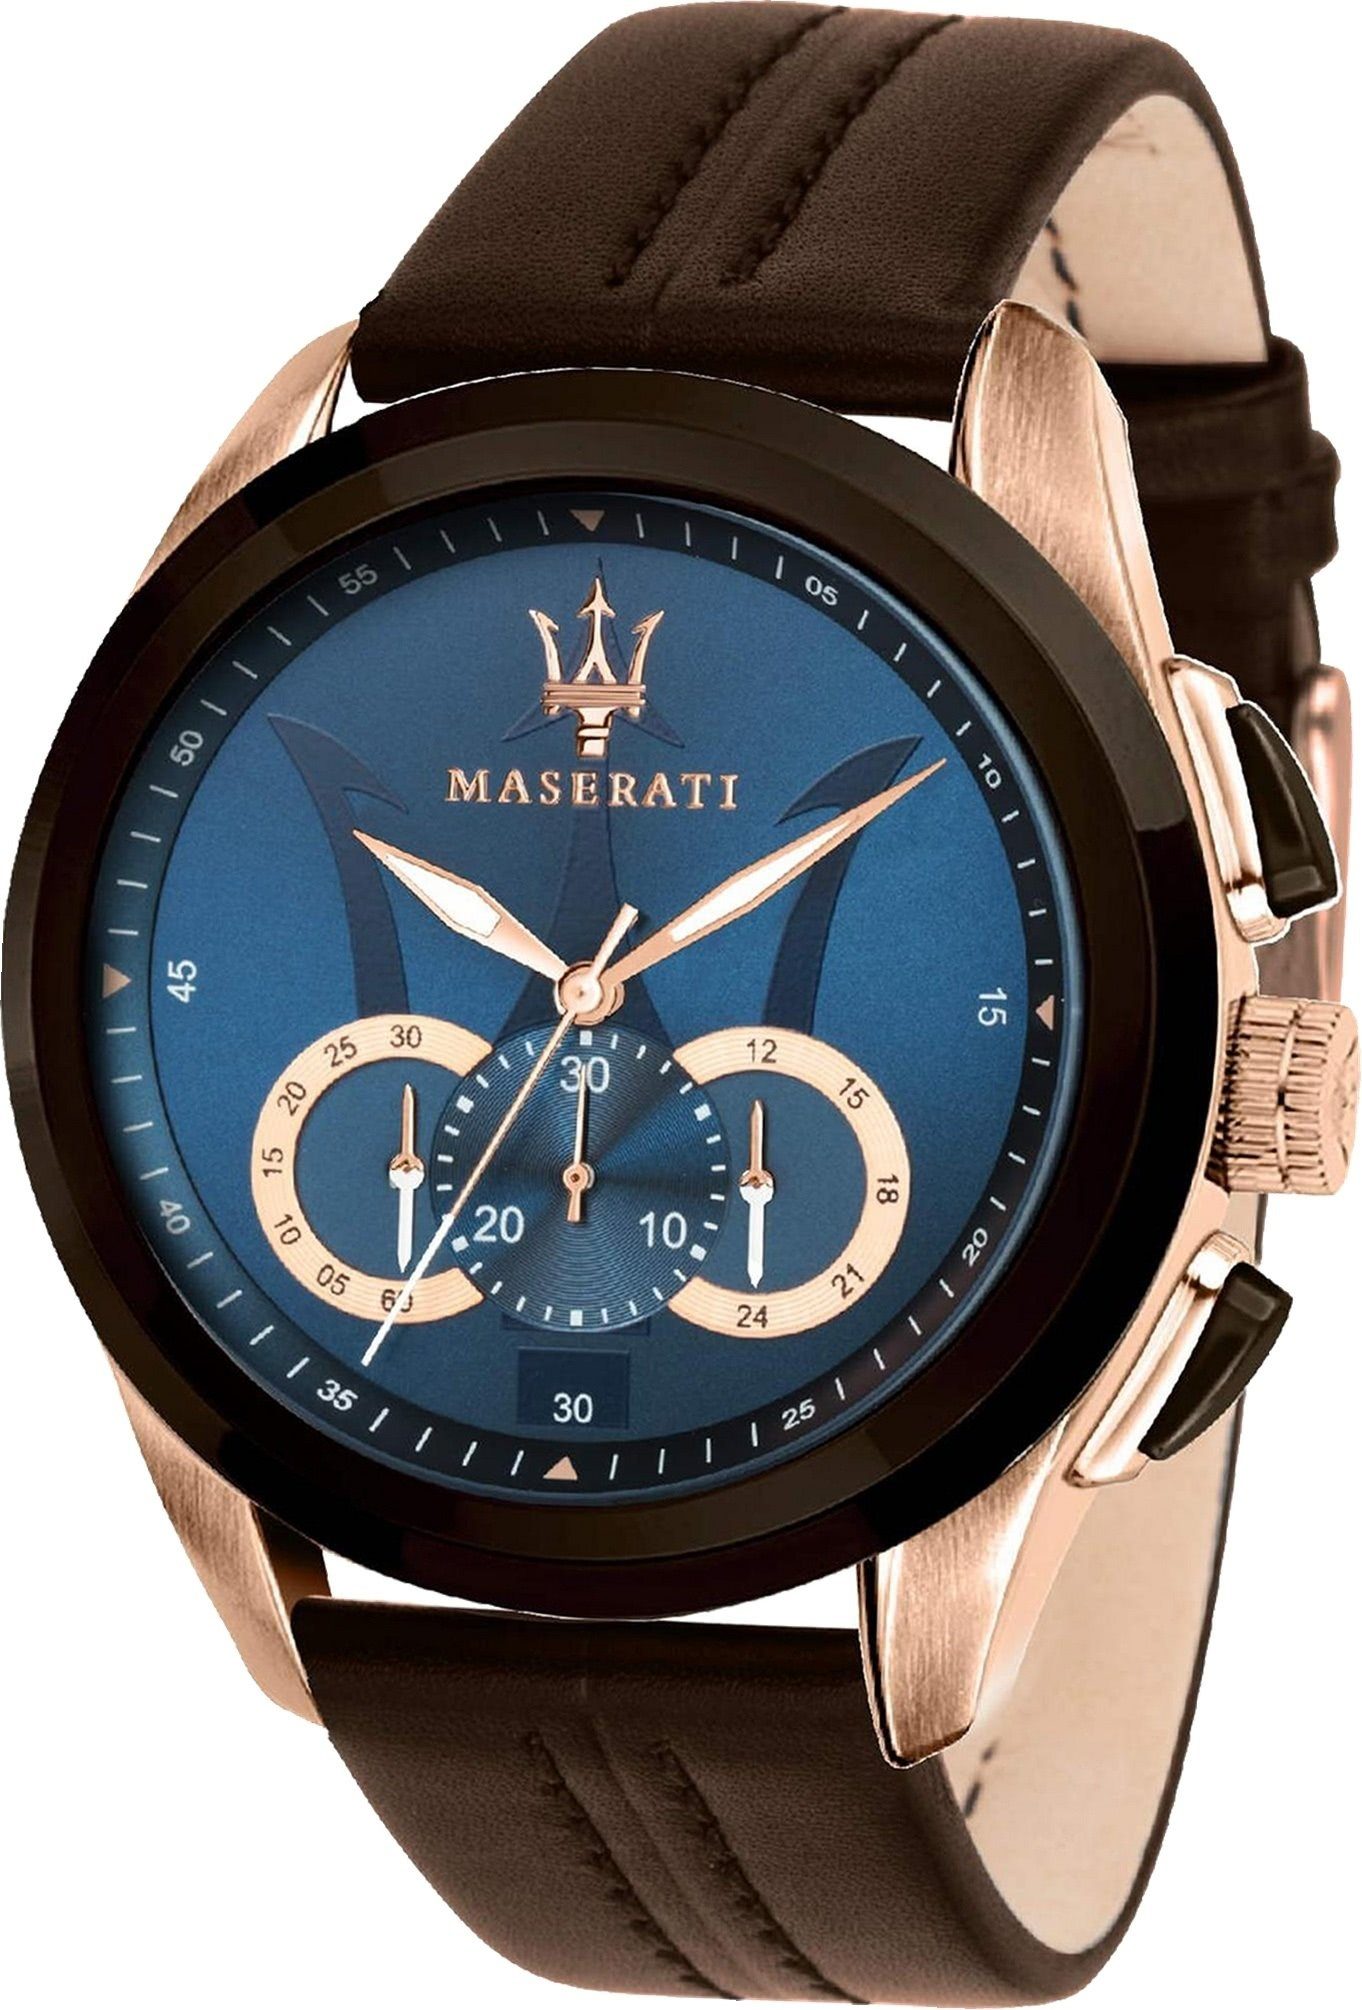 MASERATI Chronograph Maserati Leder Armband-Uhr, (Chronograph), Herrenuhr Lederarmband, rundes Gehäuse, groß (ca. 55x45mm) blau